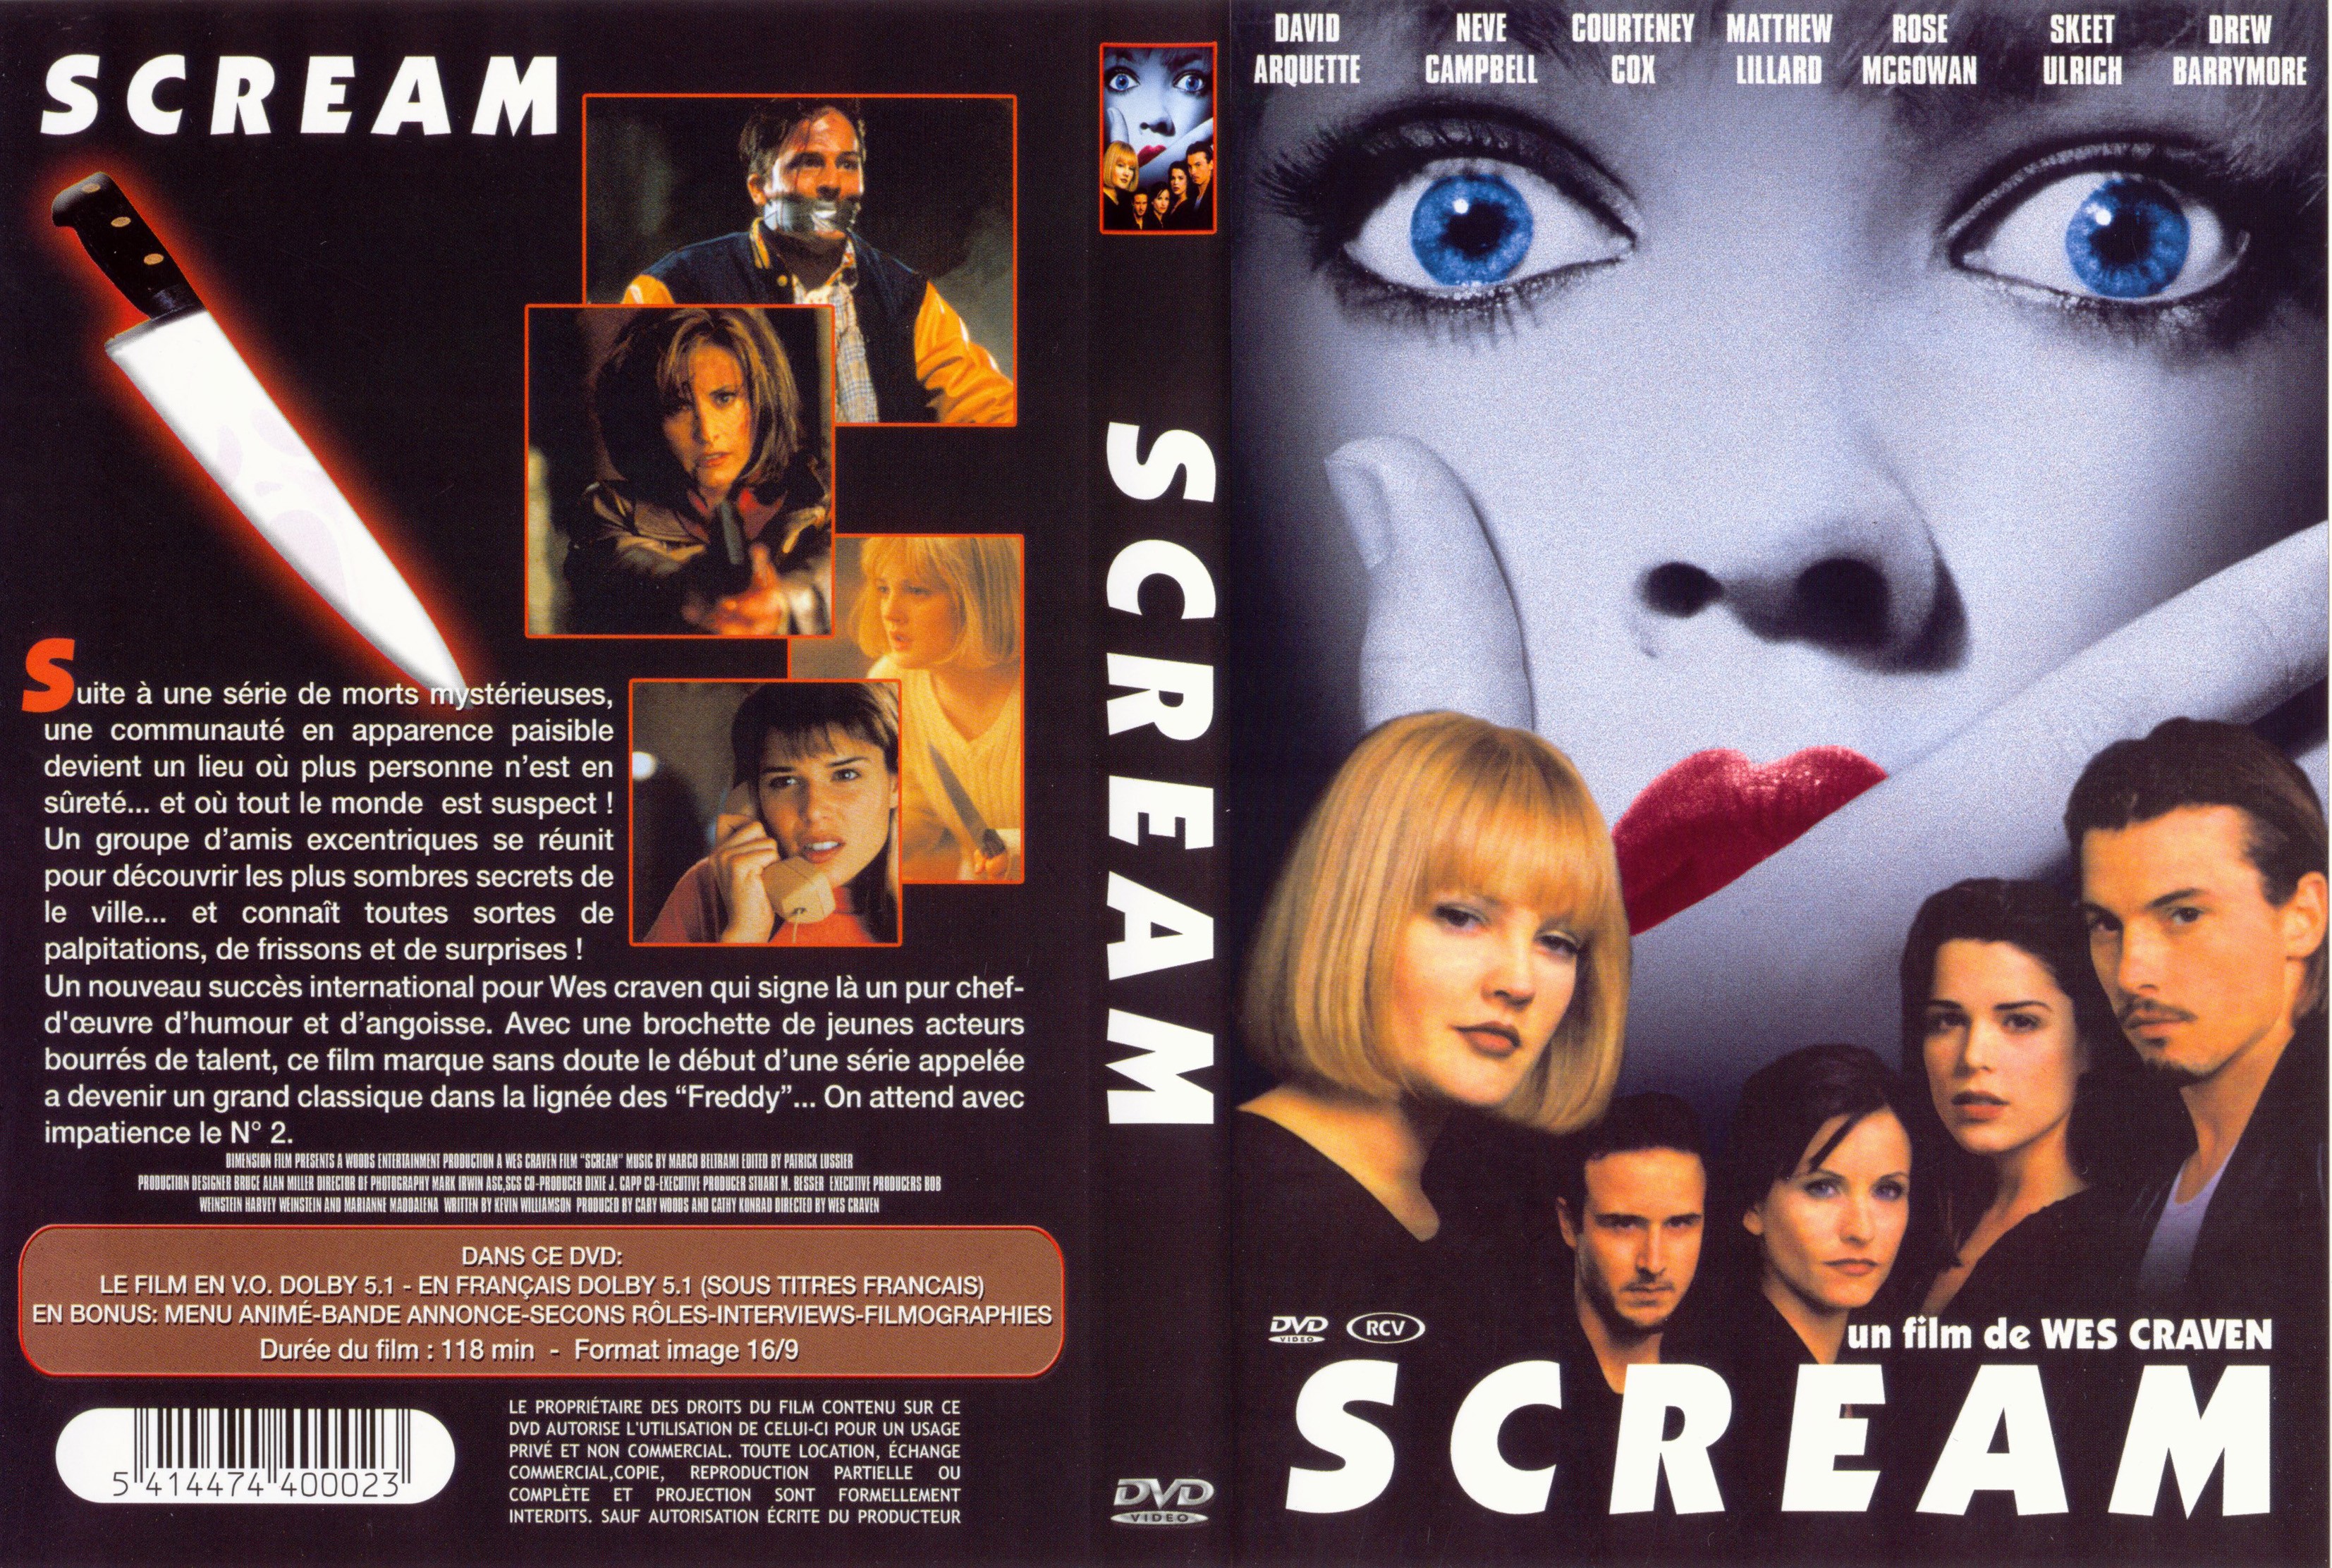 Jaquette DVD Scream v2